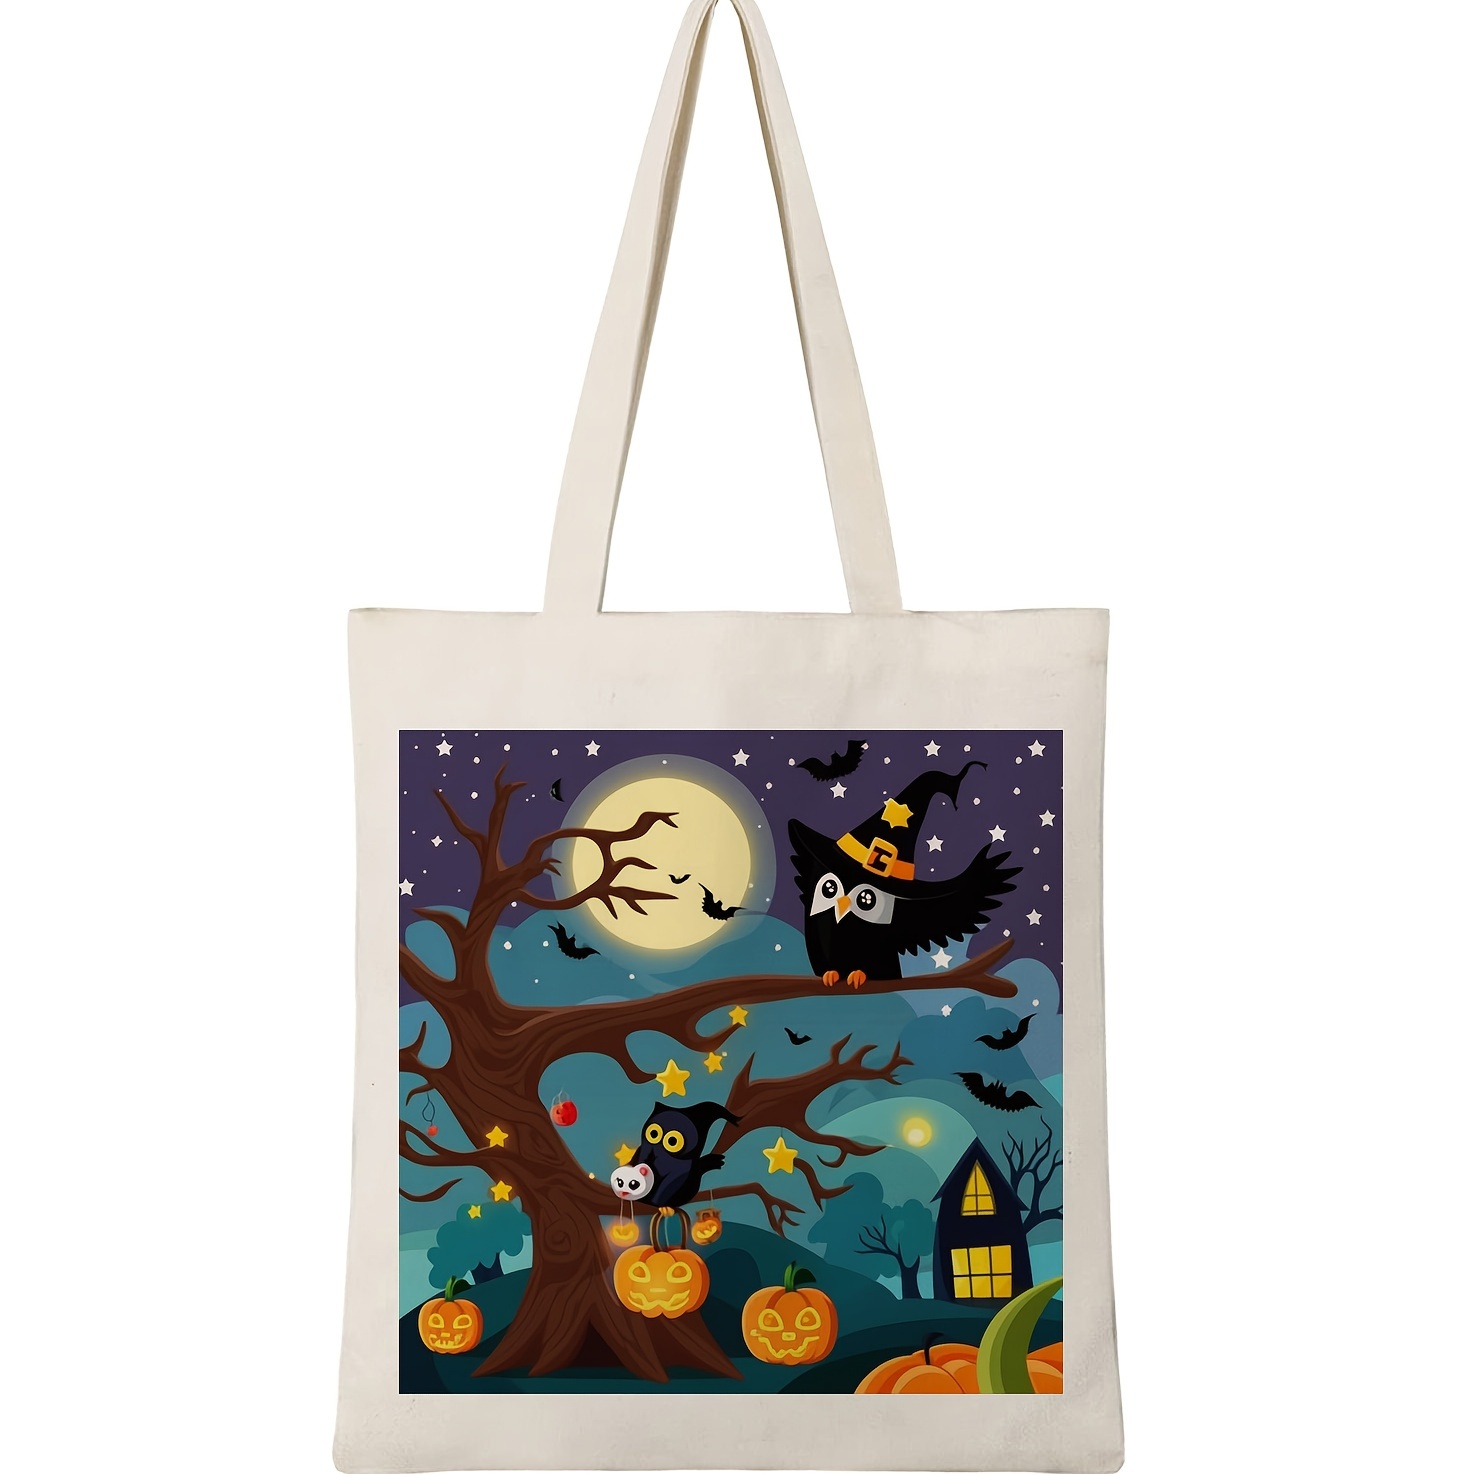 1pc Cartoon Halloween Printed Canvas Shopping Bag